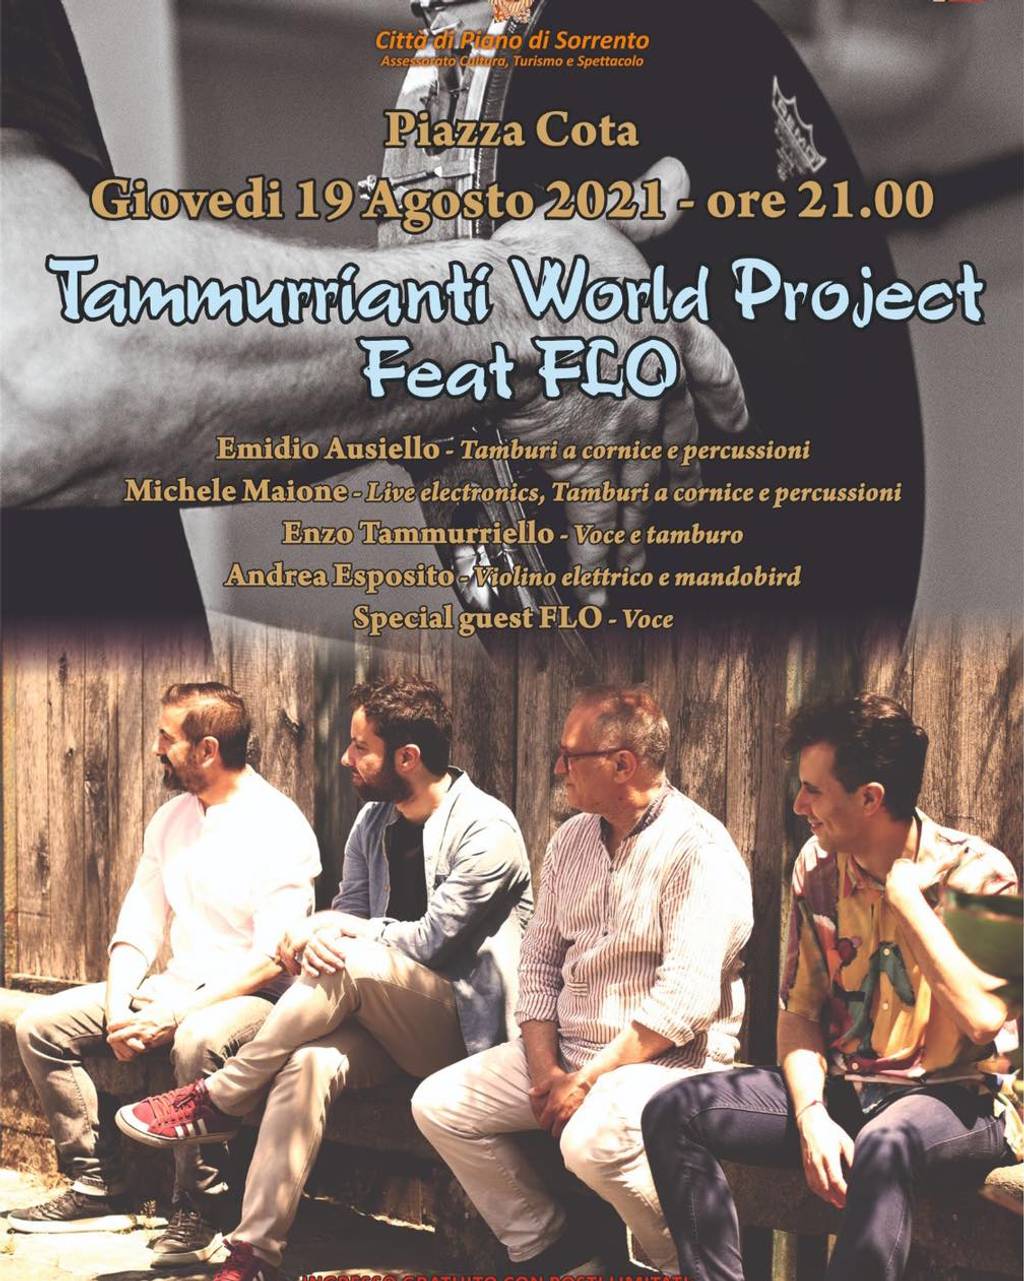 Tammurrianti World Project